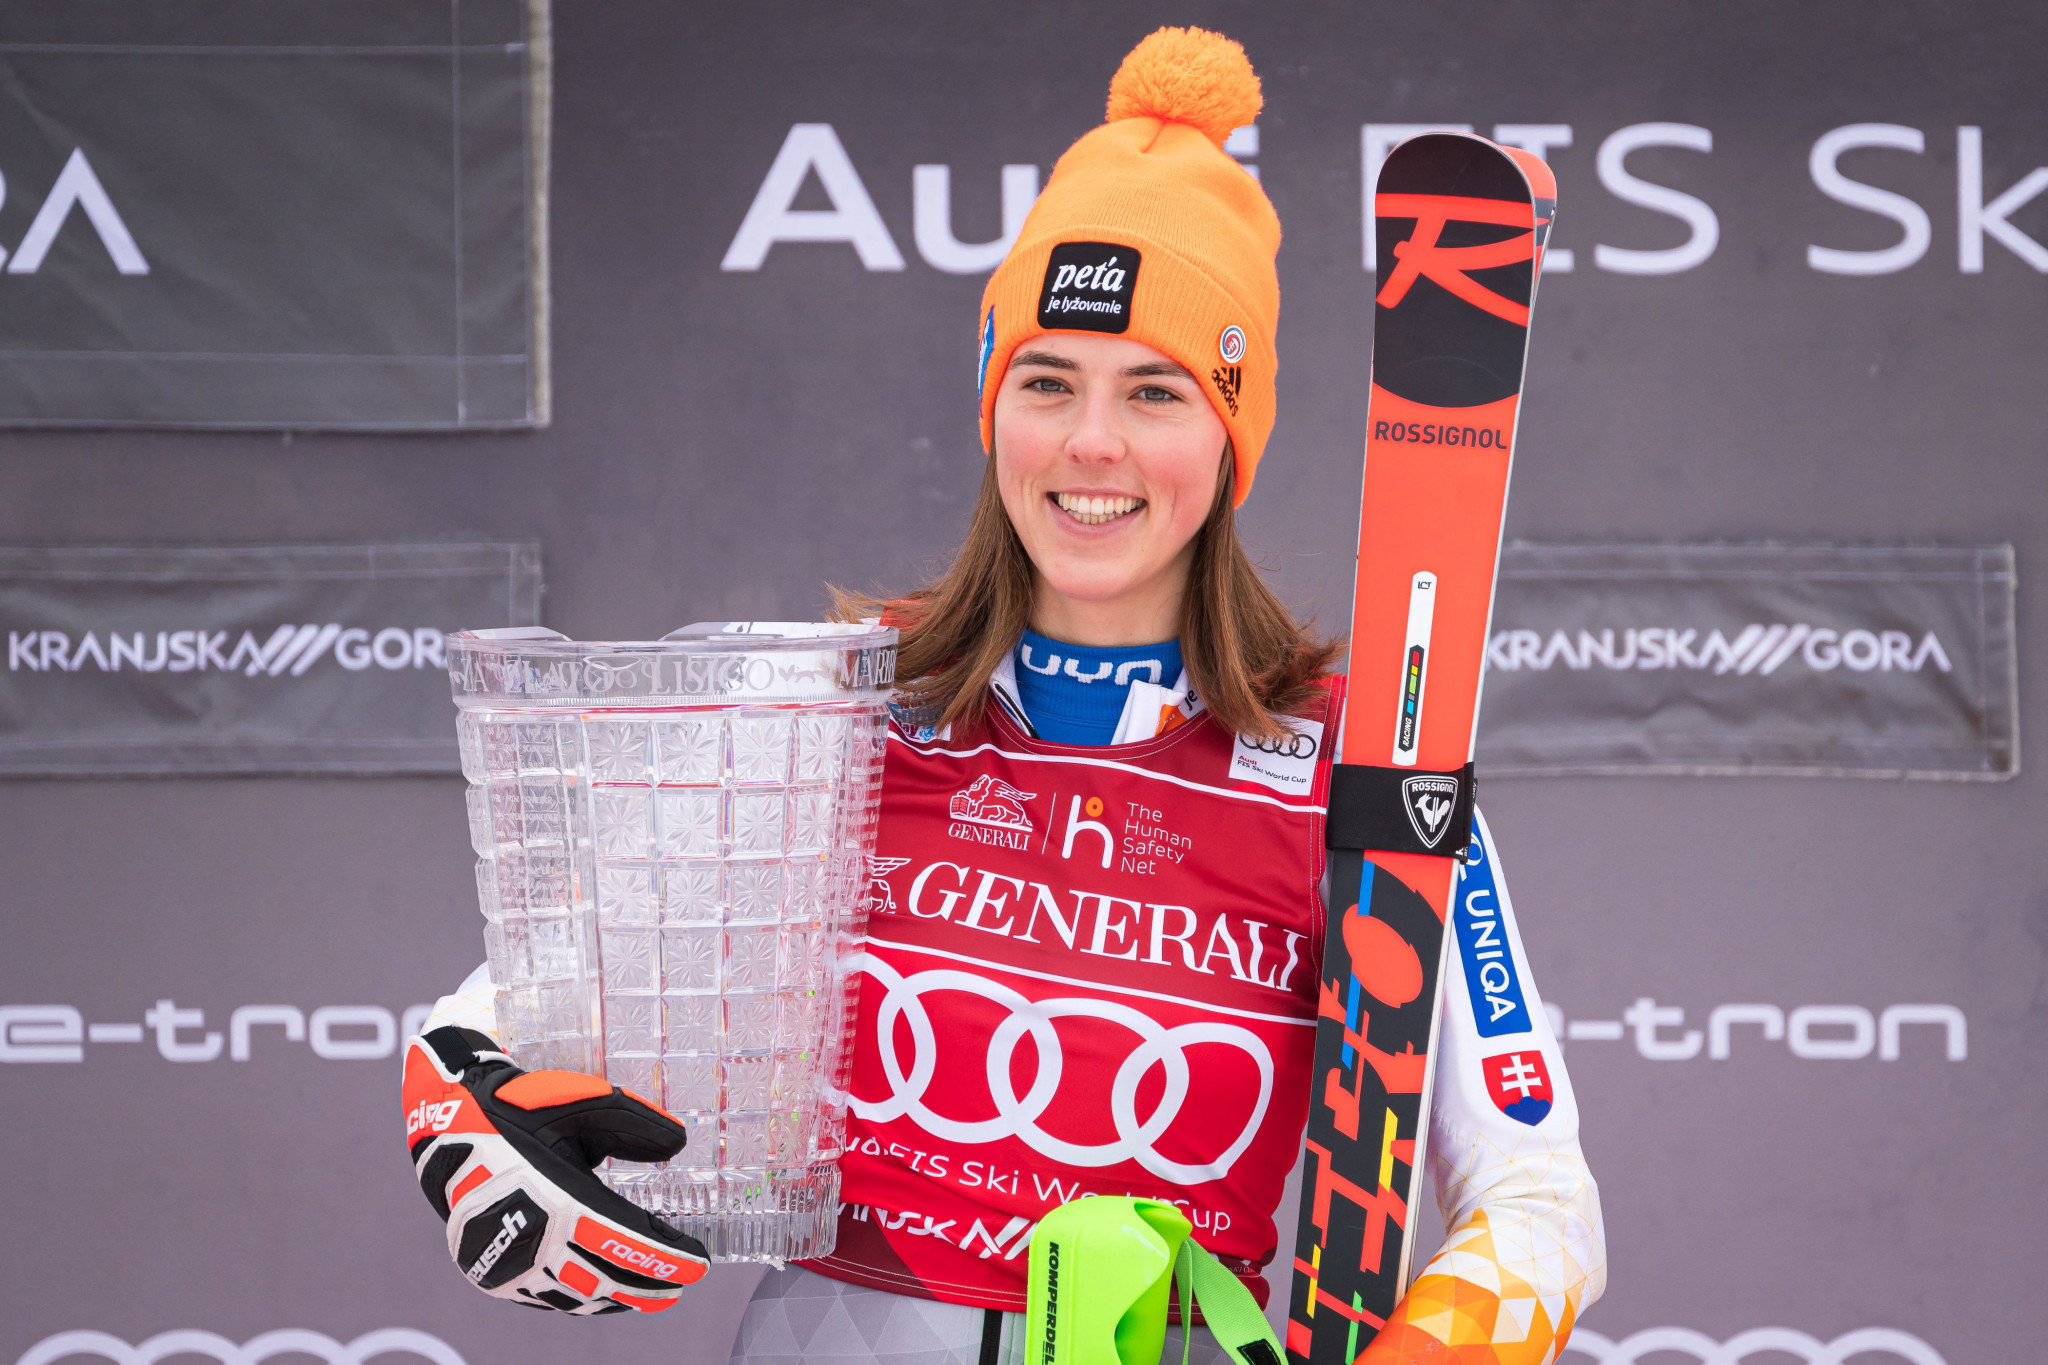 Vlhová earns 25th Alpine Ski World Cup victory in Kranjska Gora